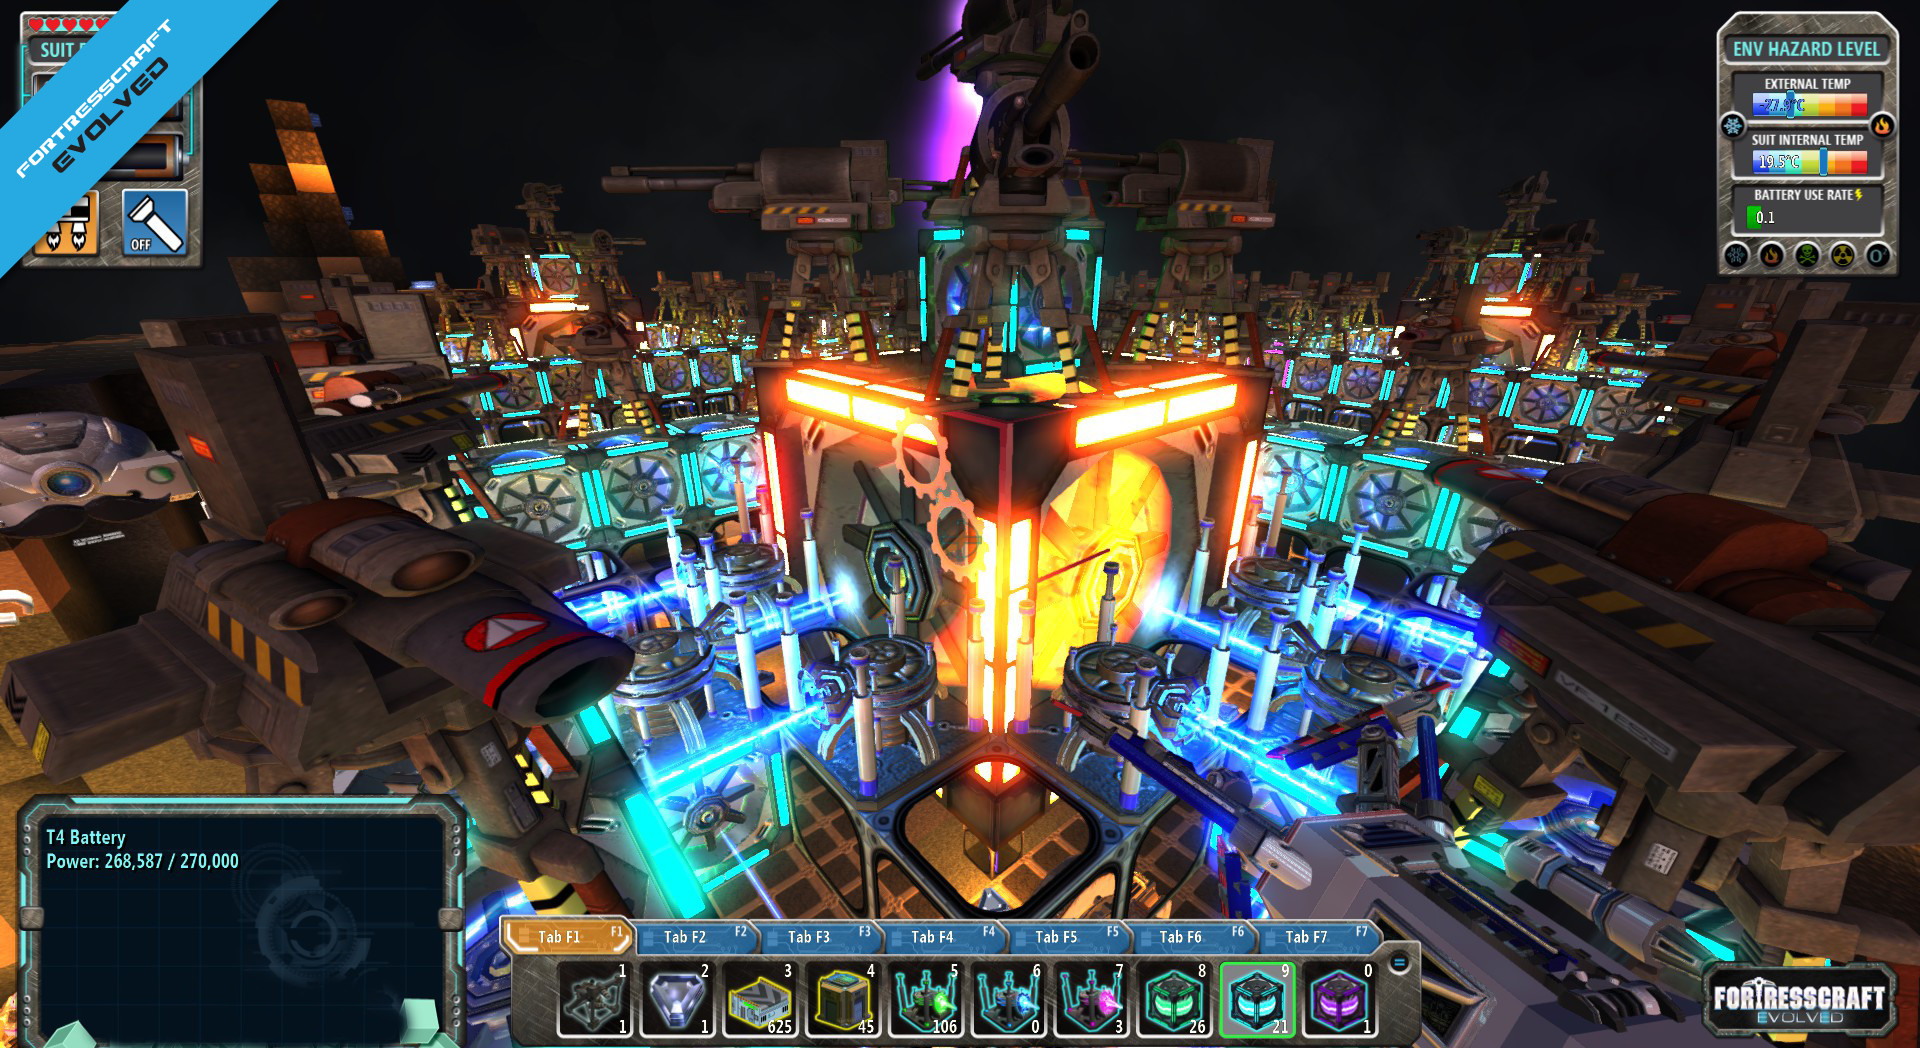 FortressCraft Evolved - screenshot 29